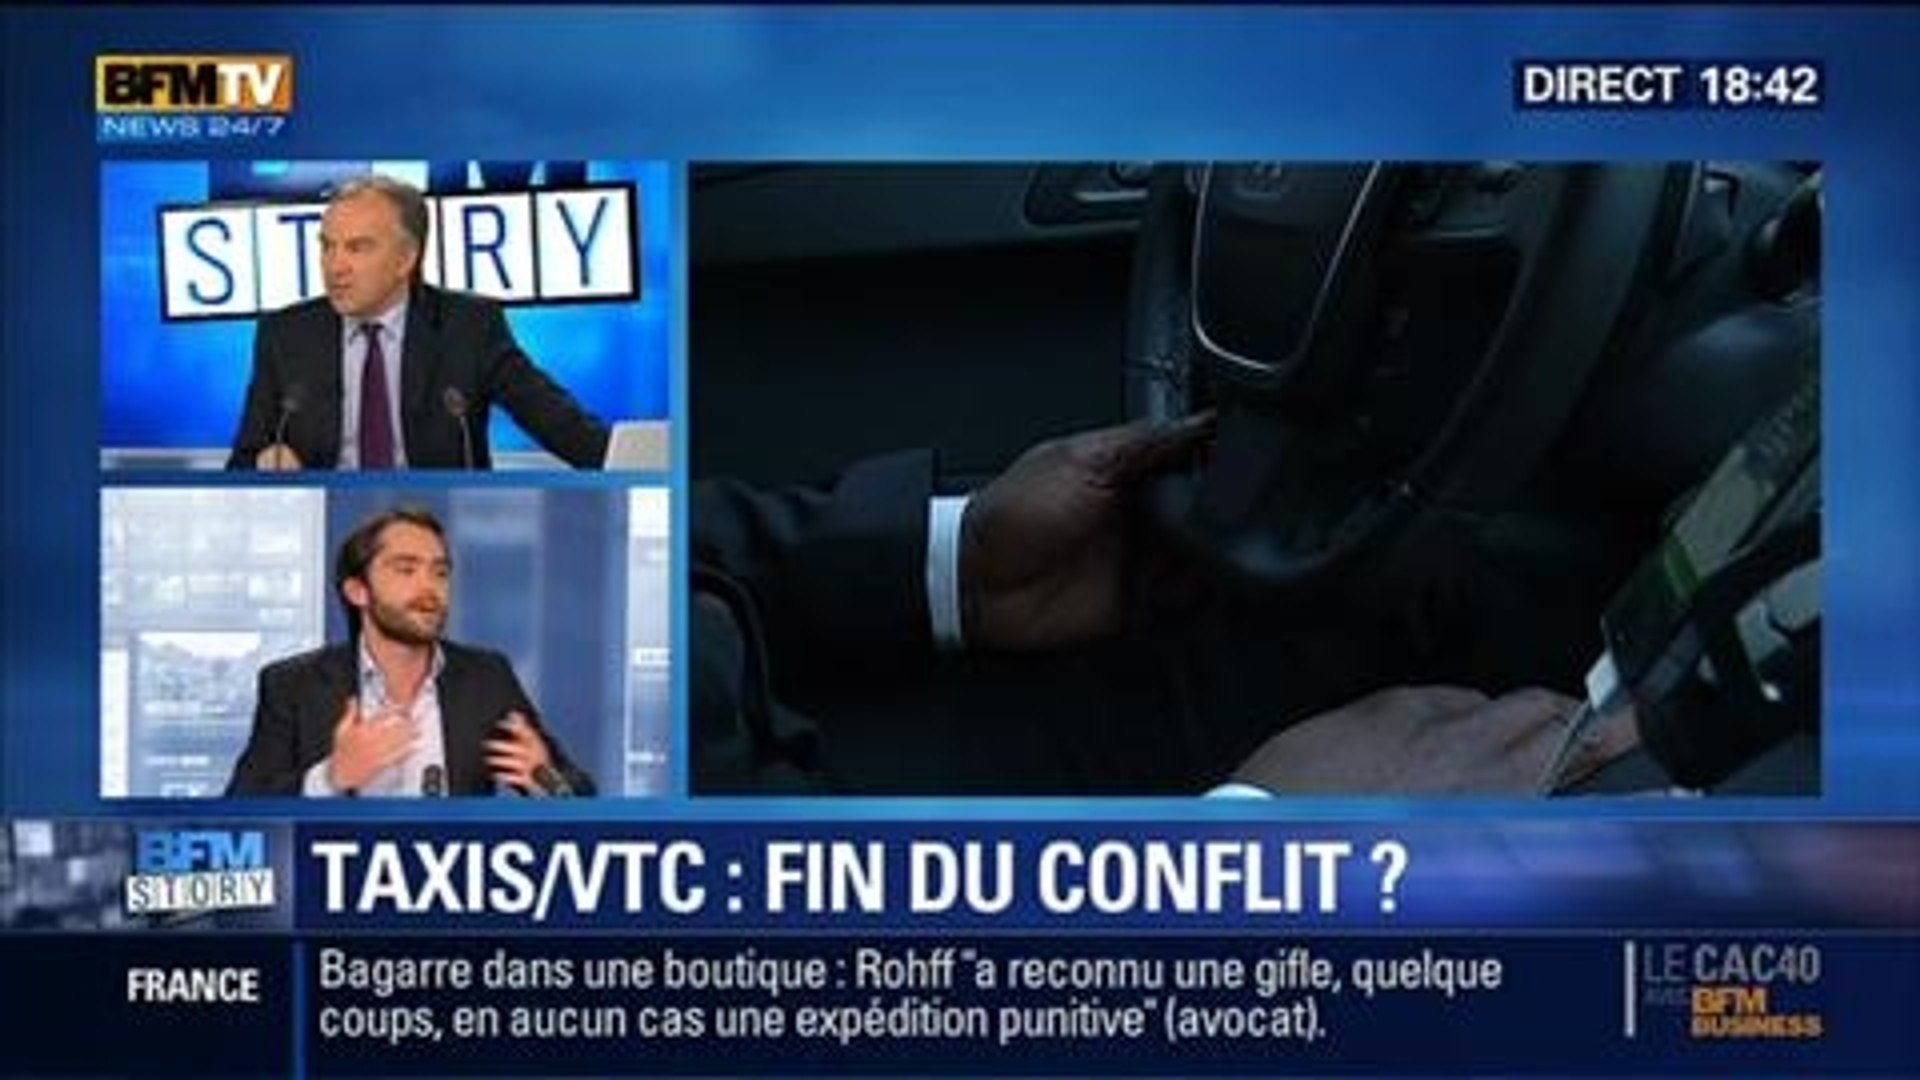 BFM Story: Taxi / VTC: Fin du conflit ? - 24/04 - Vidéo Dailymotion